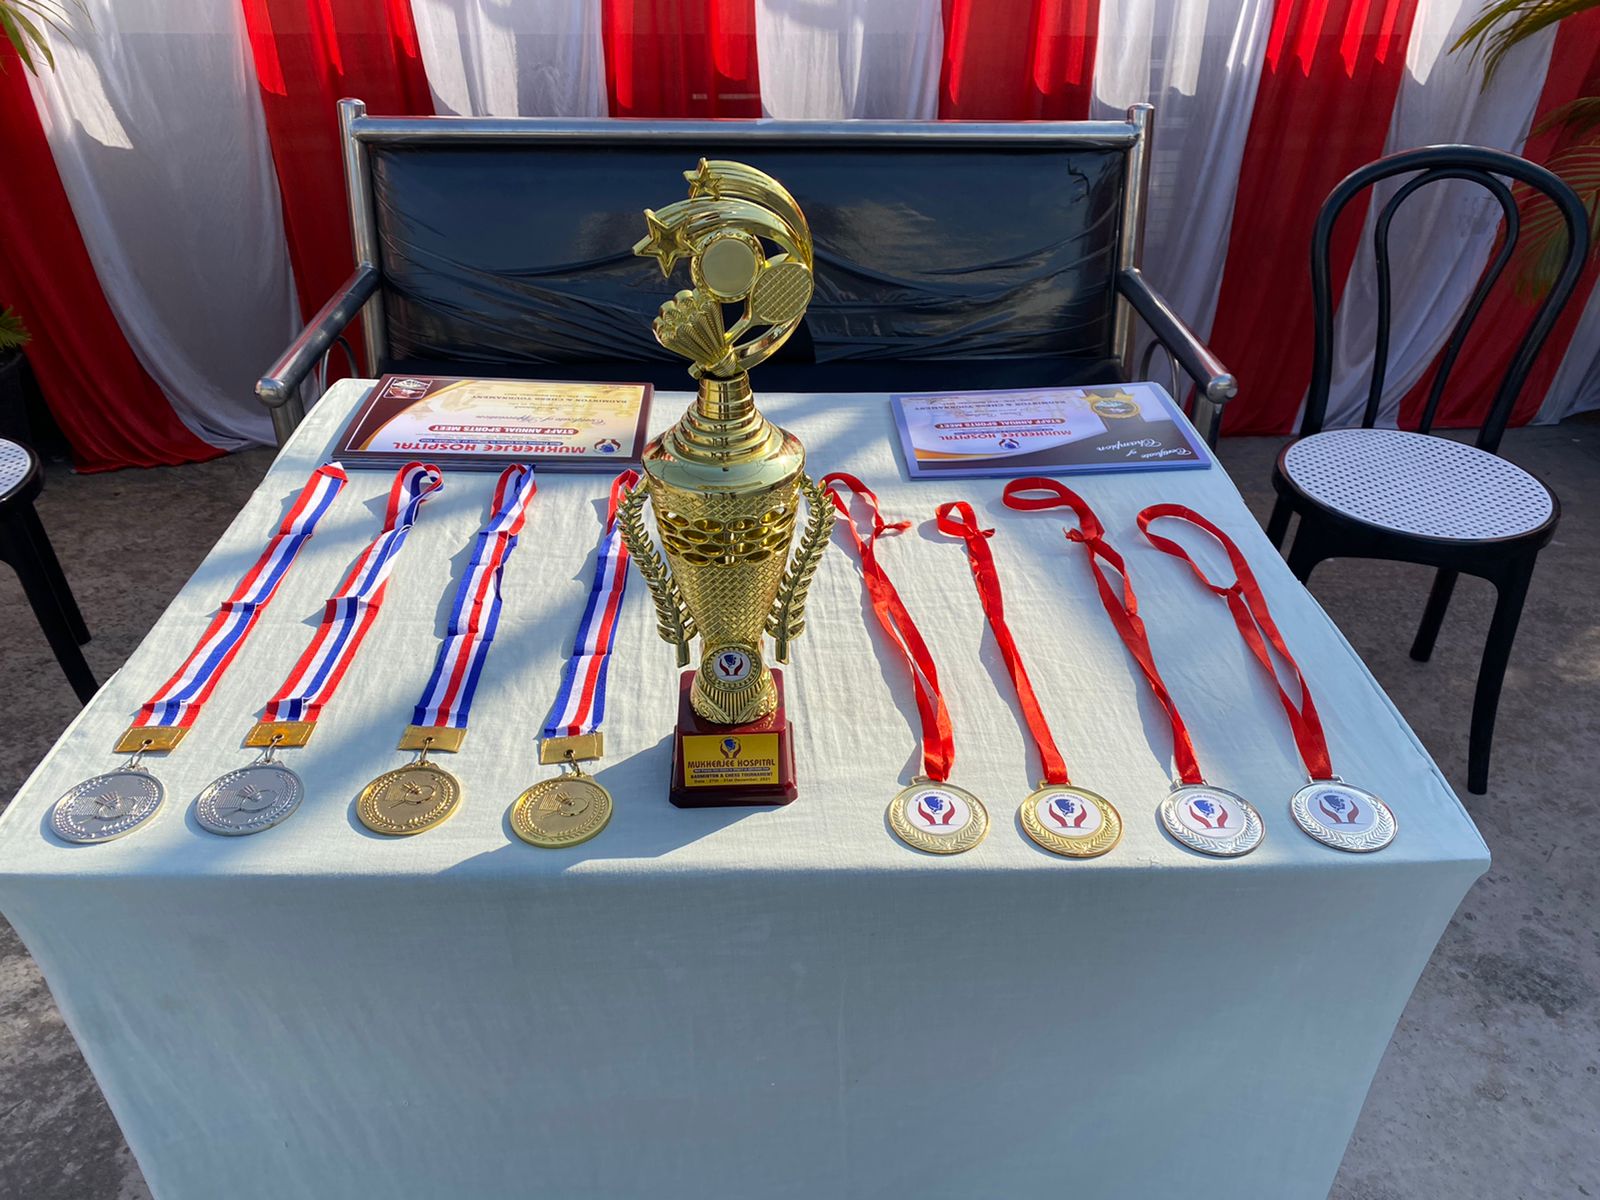 Annual Staff Sports Tournament Prize Distribution Ceremony 2022